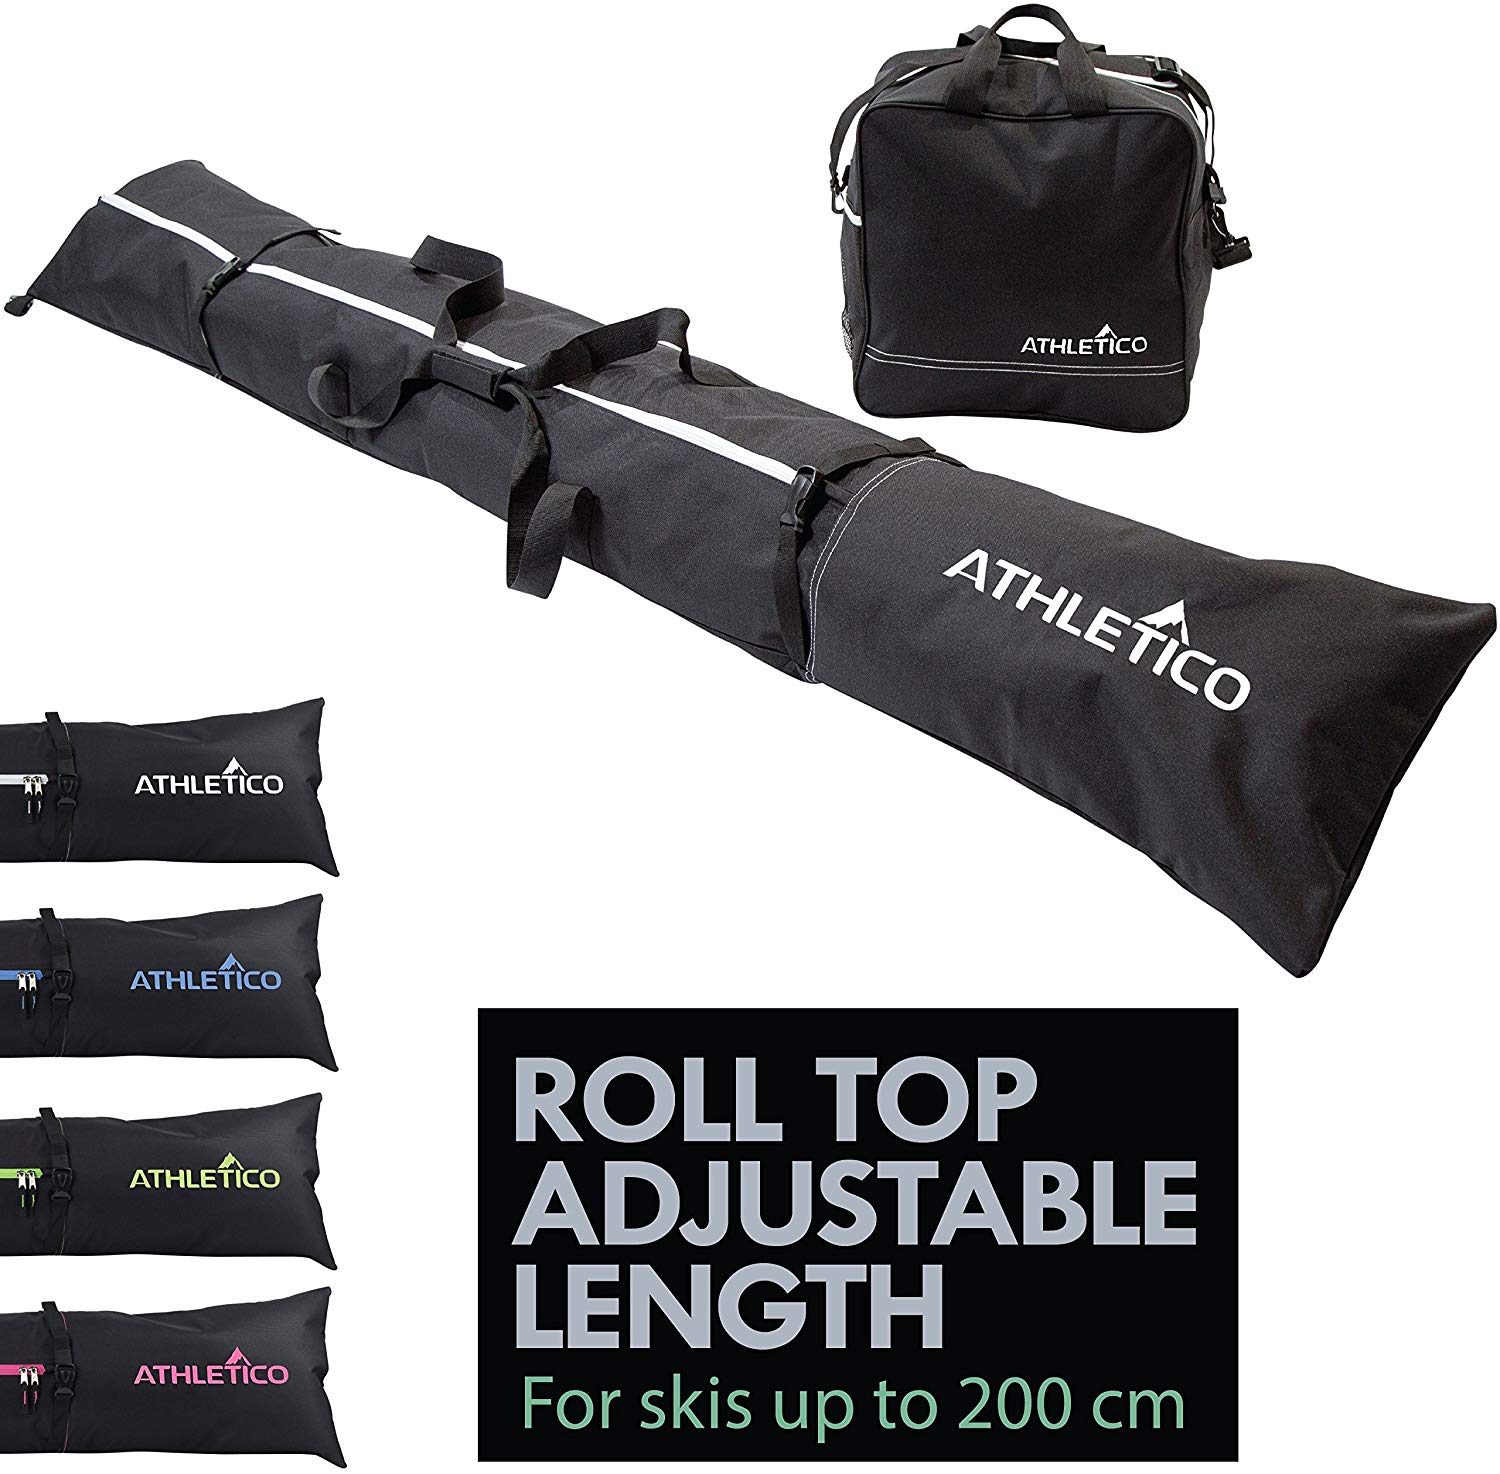 Athletico Ski and Boot Bag Combo